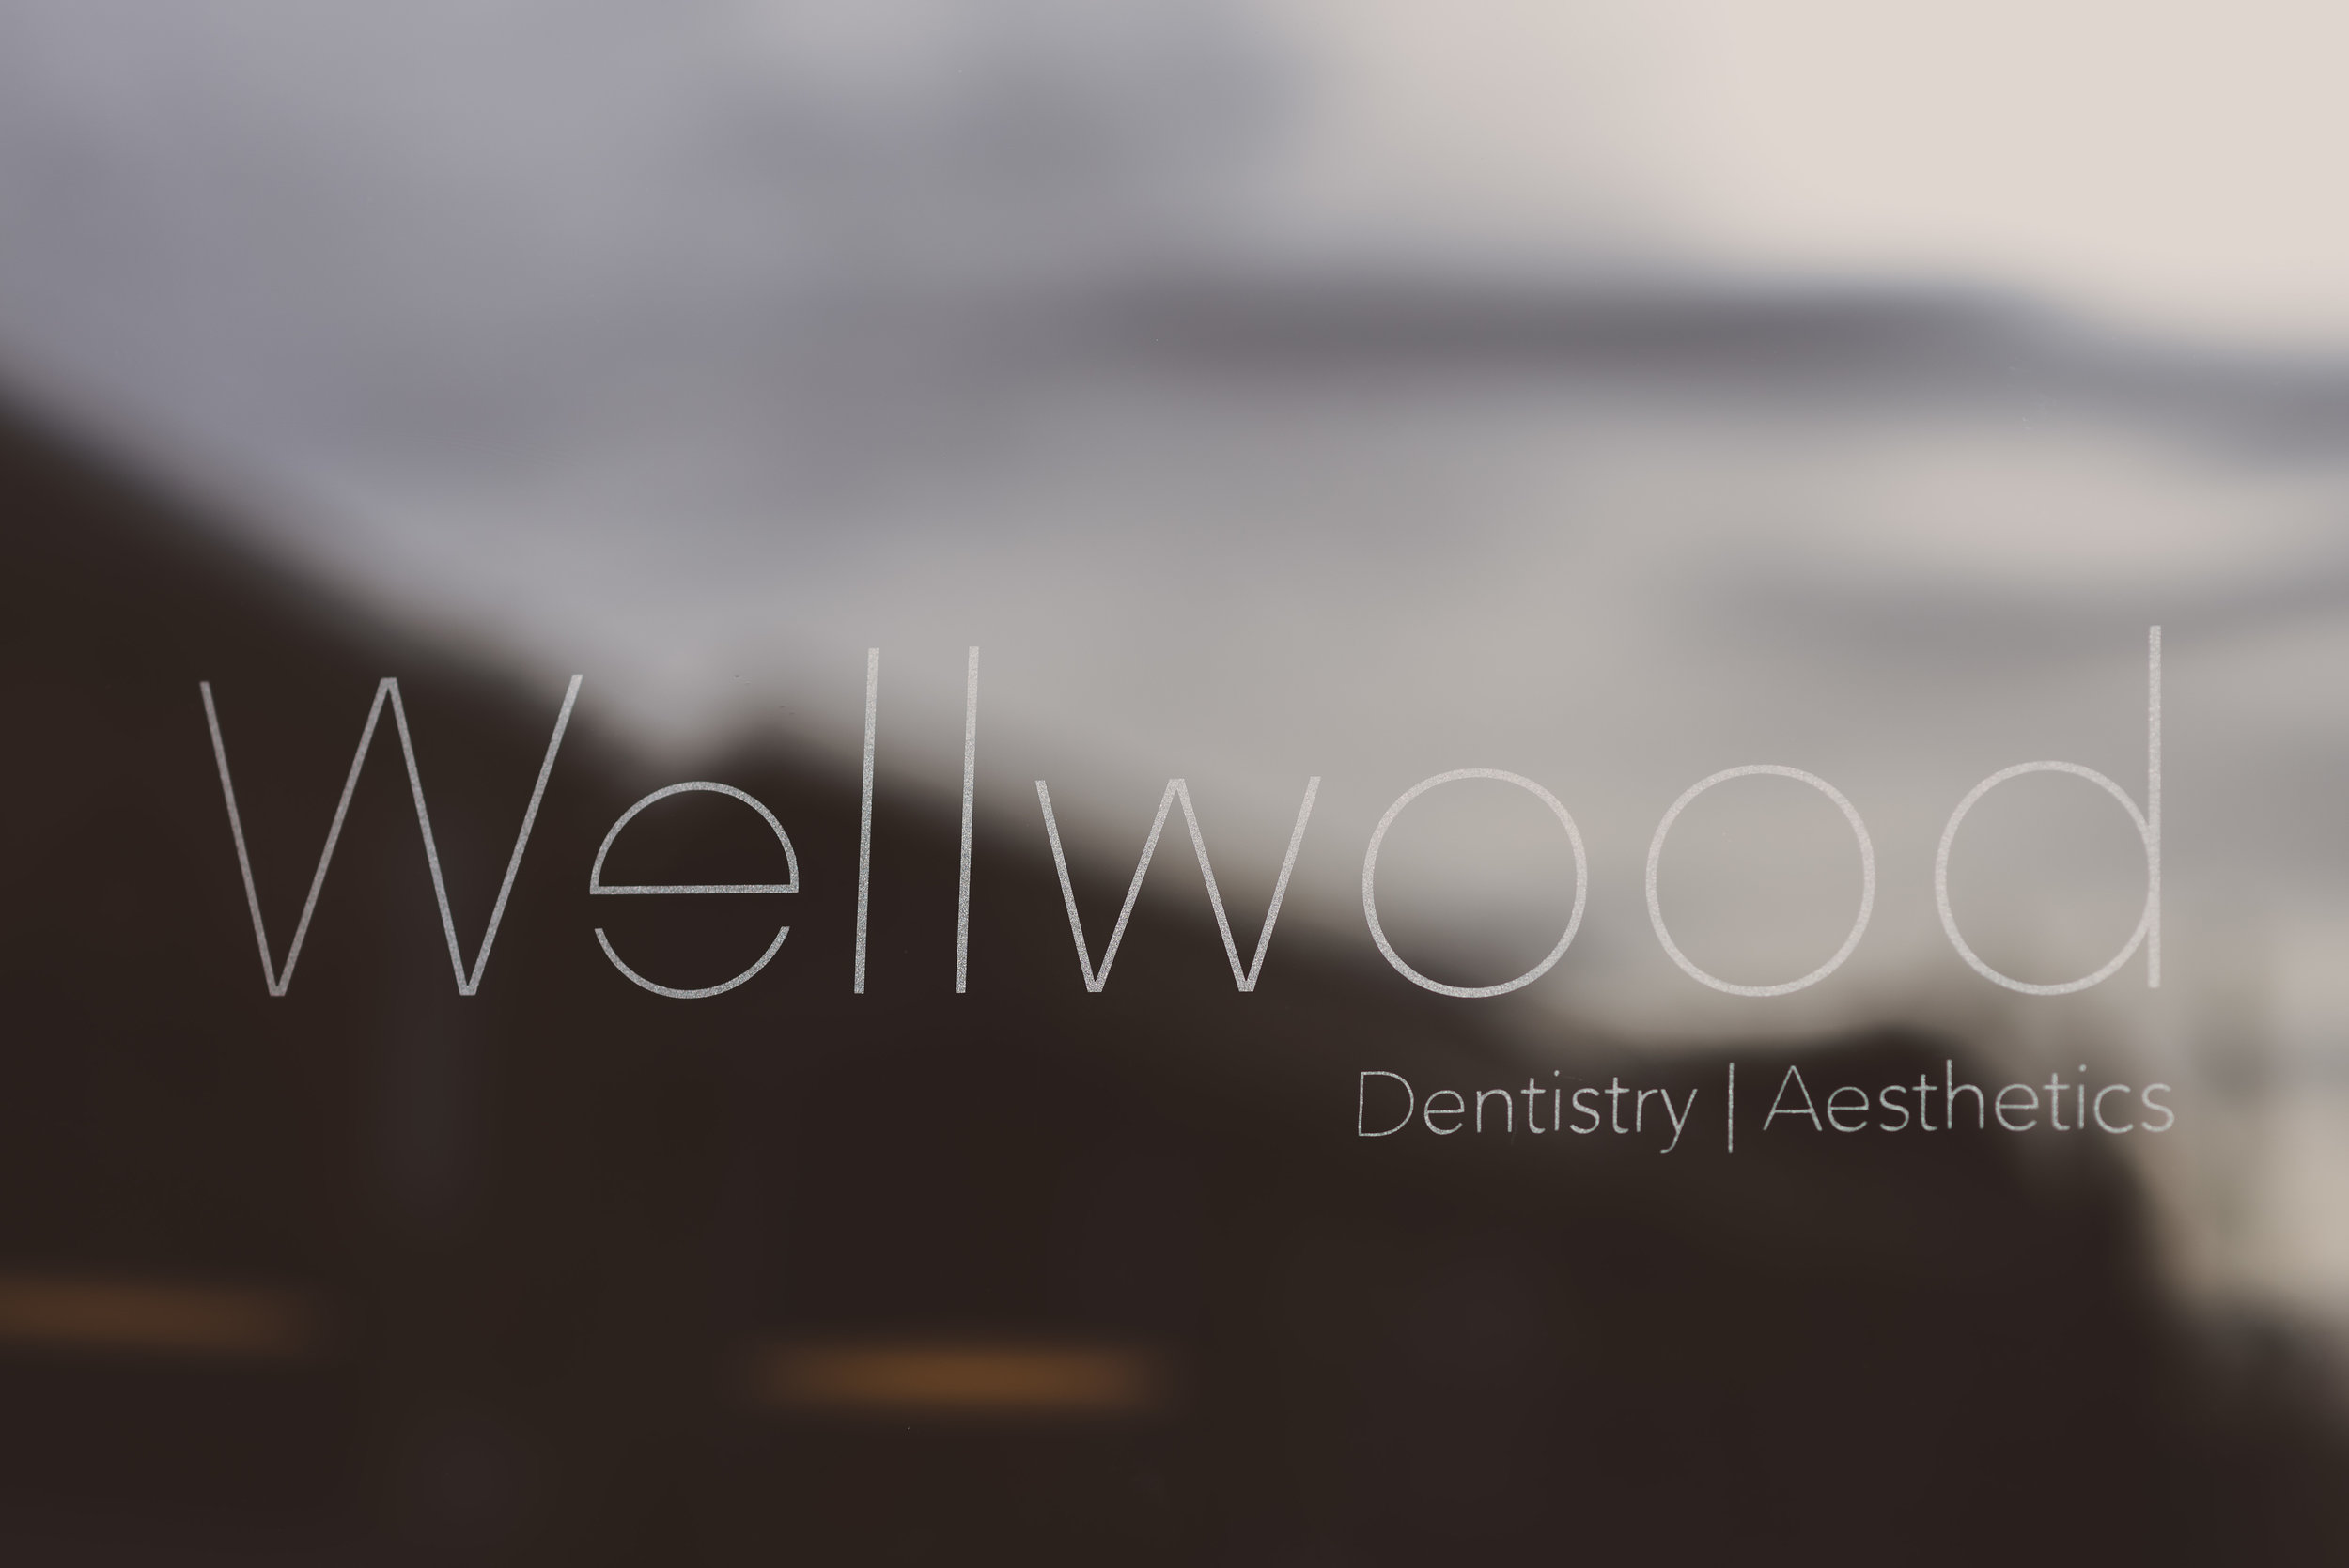 Wellwood-21.jpg